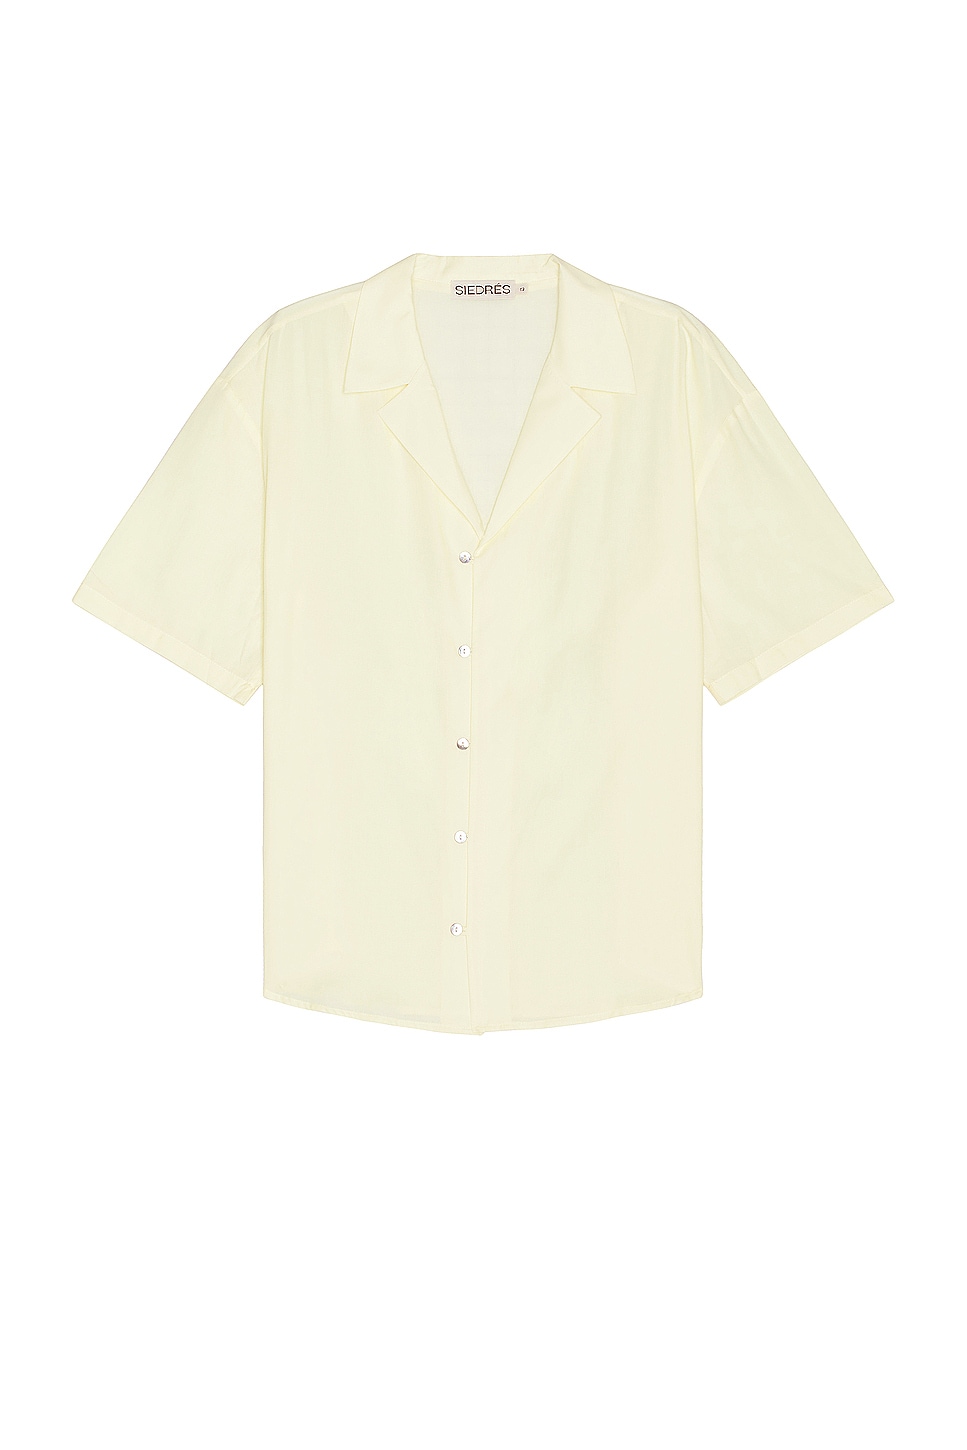 Colton Resort Collar Short Sleeve Shirt in Yellow